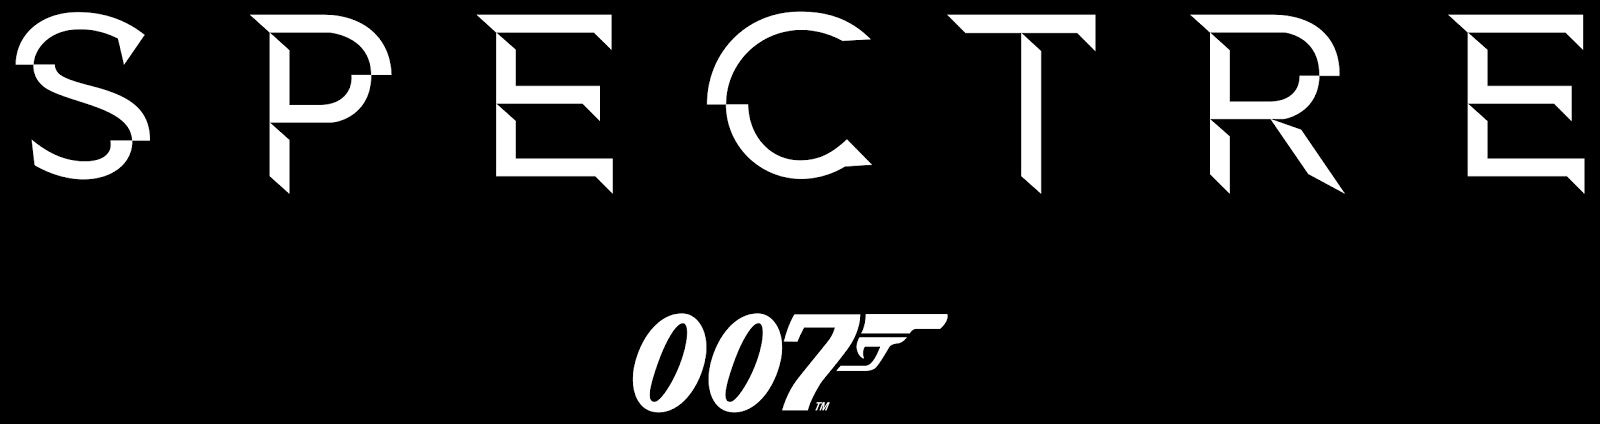 Bond 24 Spectre Official Logo Artwork